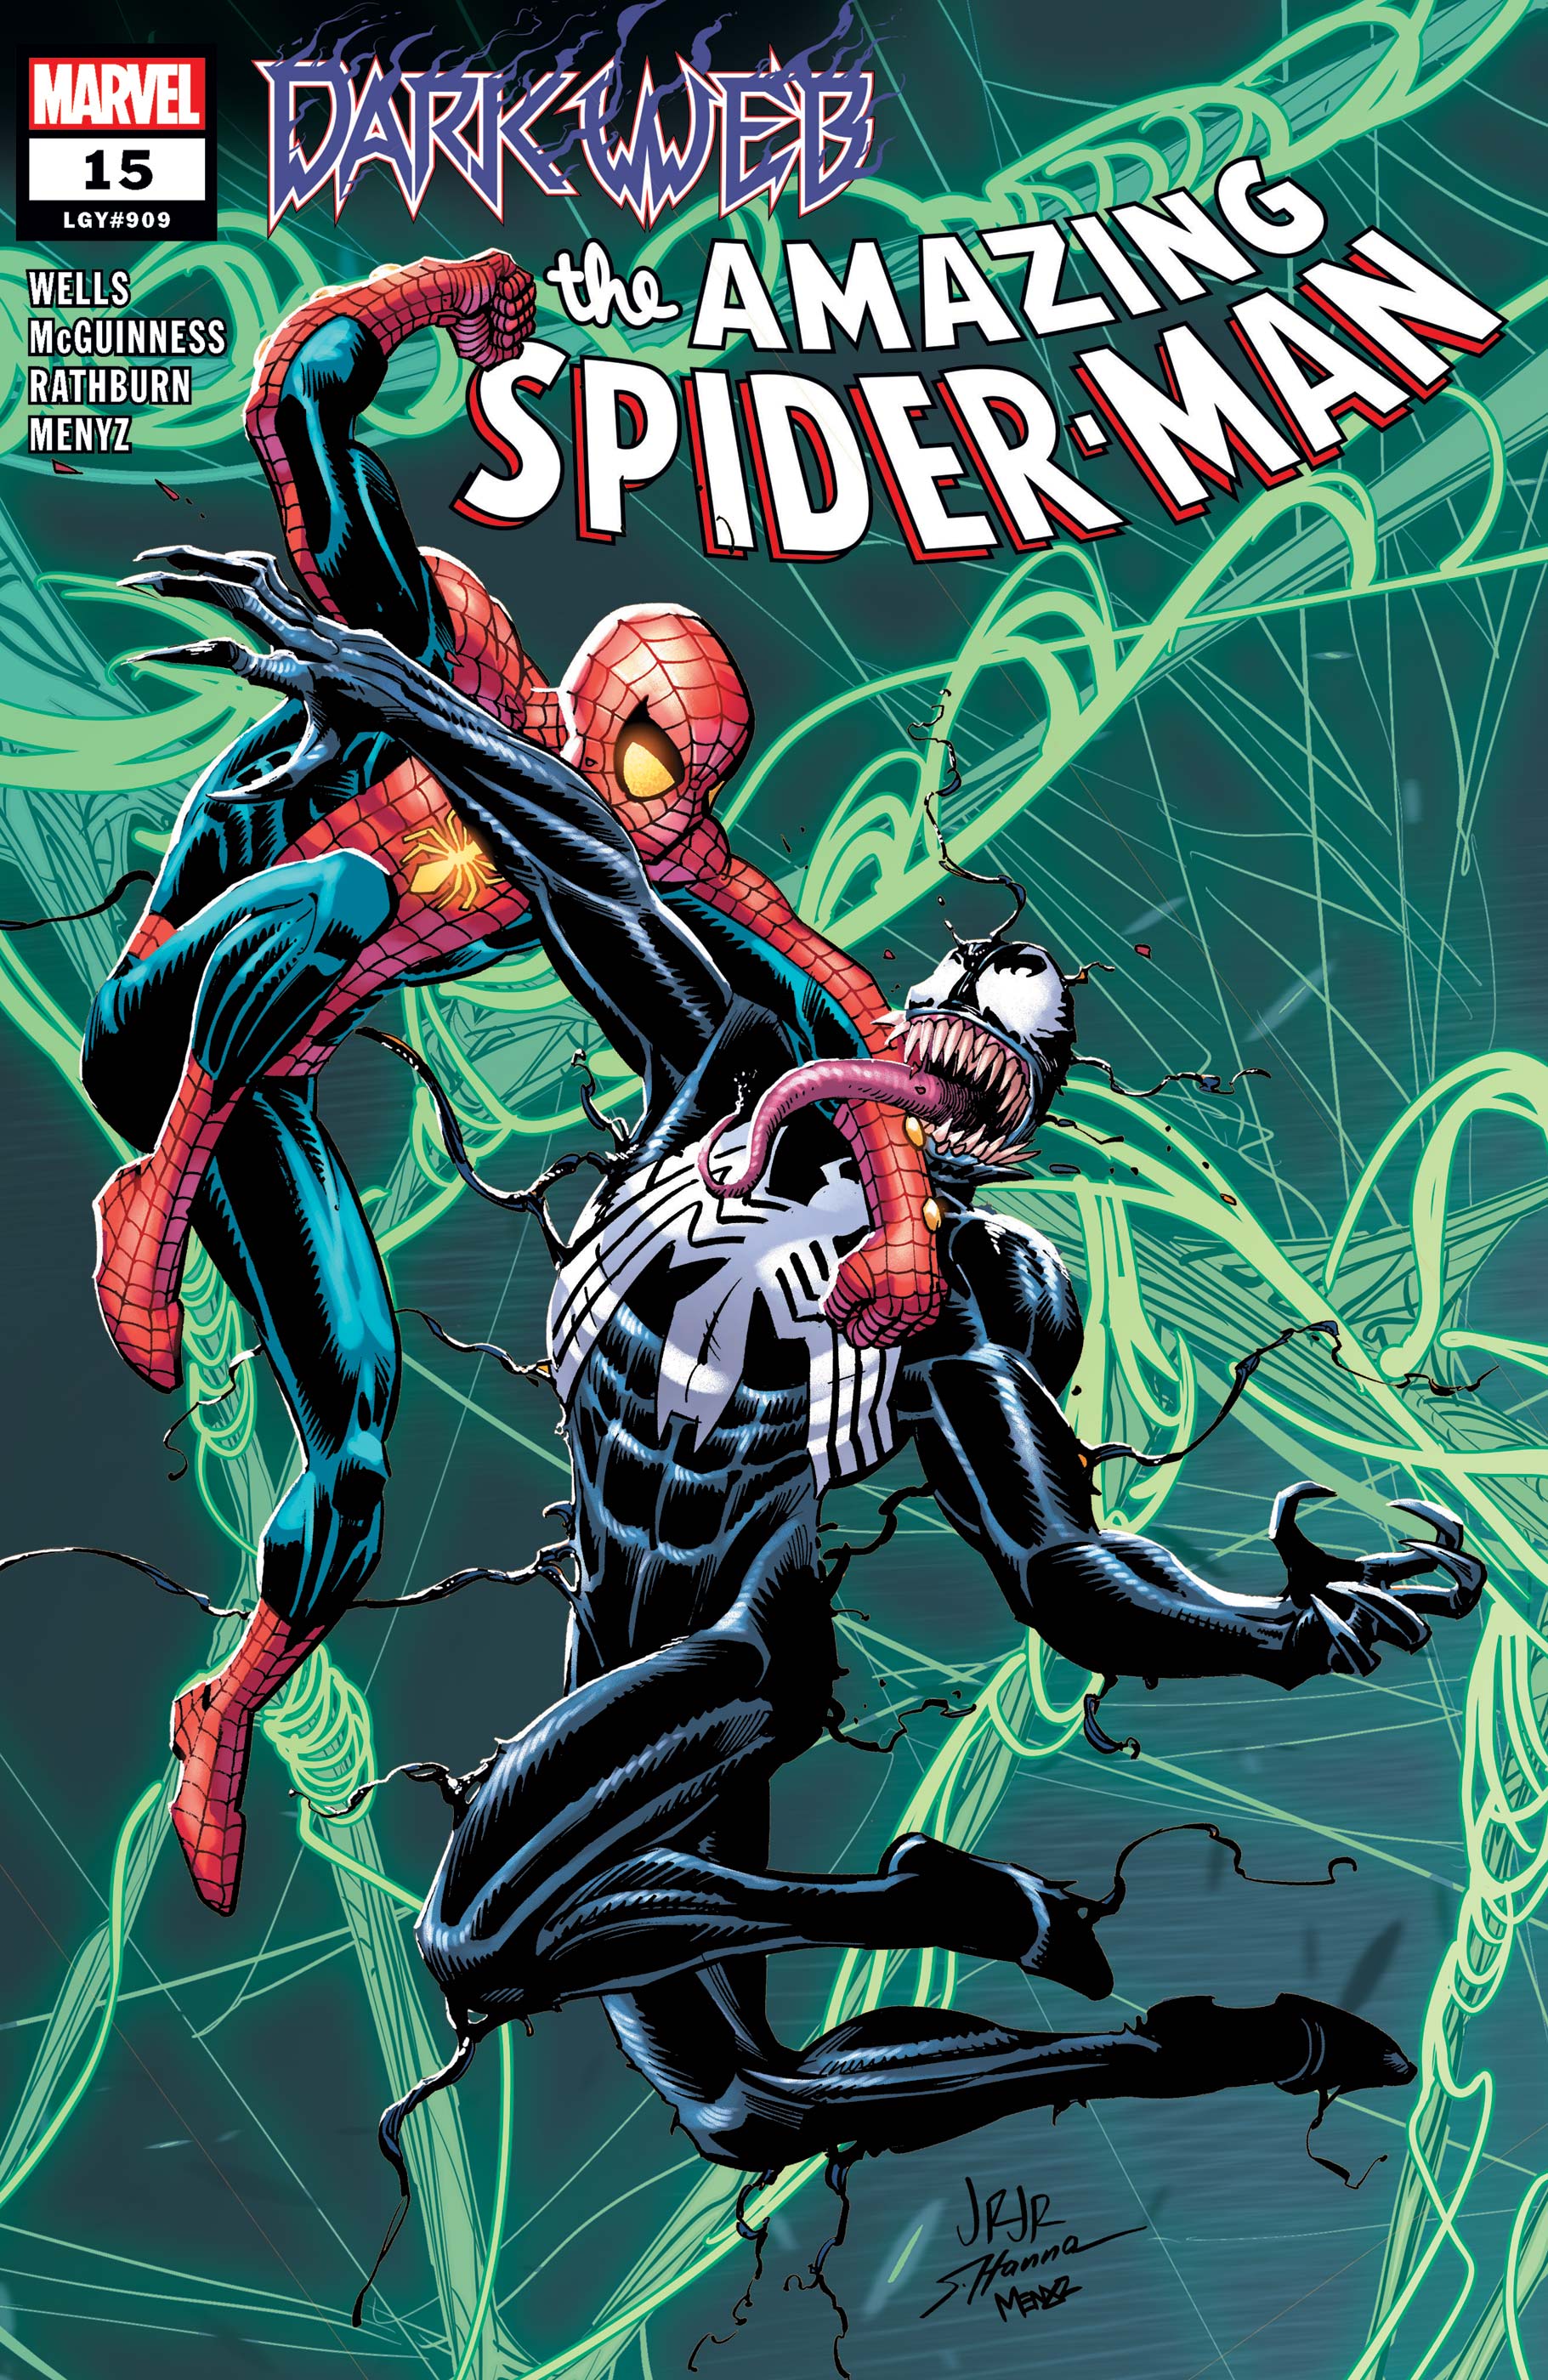 Spiderman Vs Venom - Amazing Spiderman Cartoon Gameplay